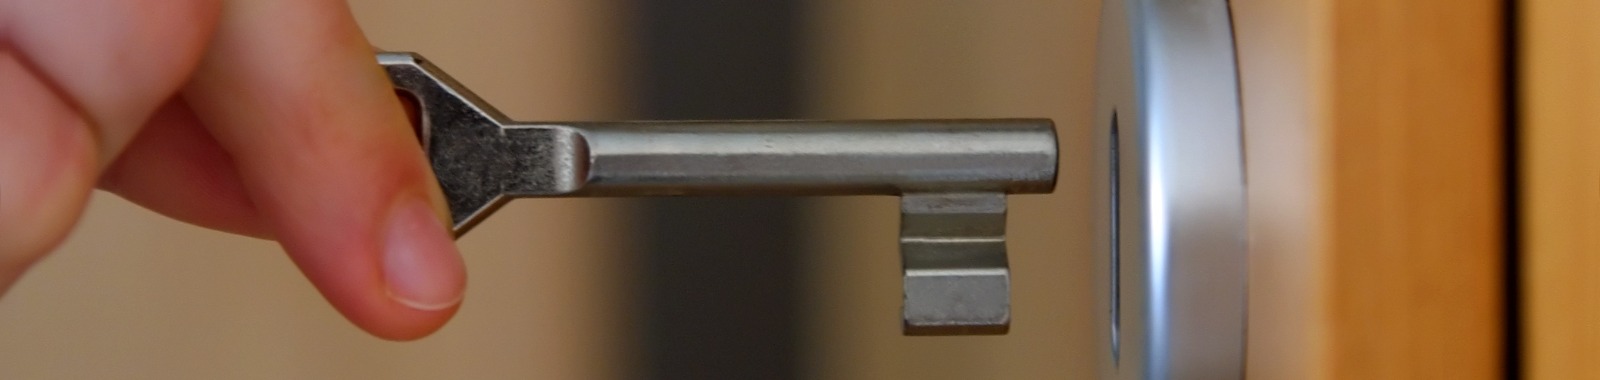 Key being inserted into door lock